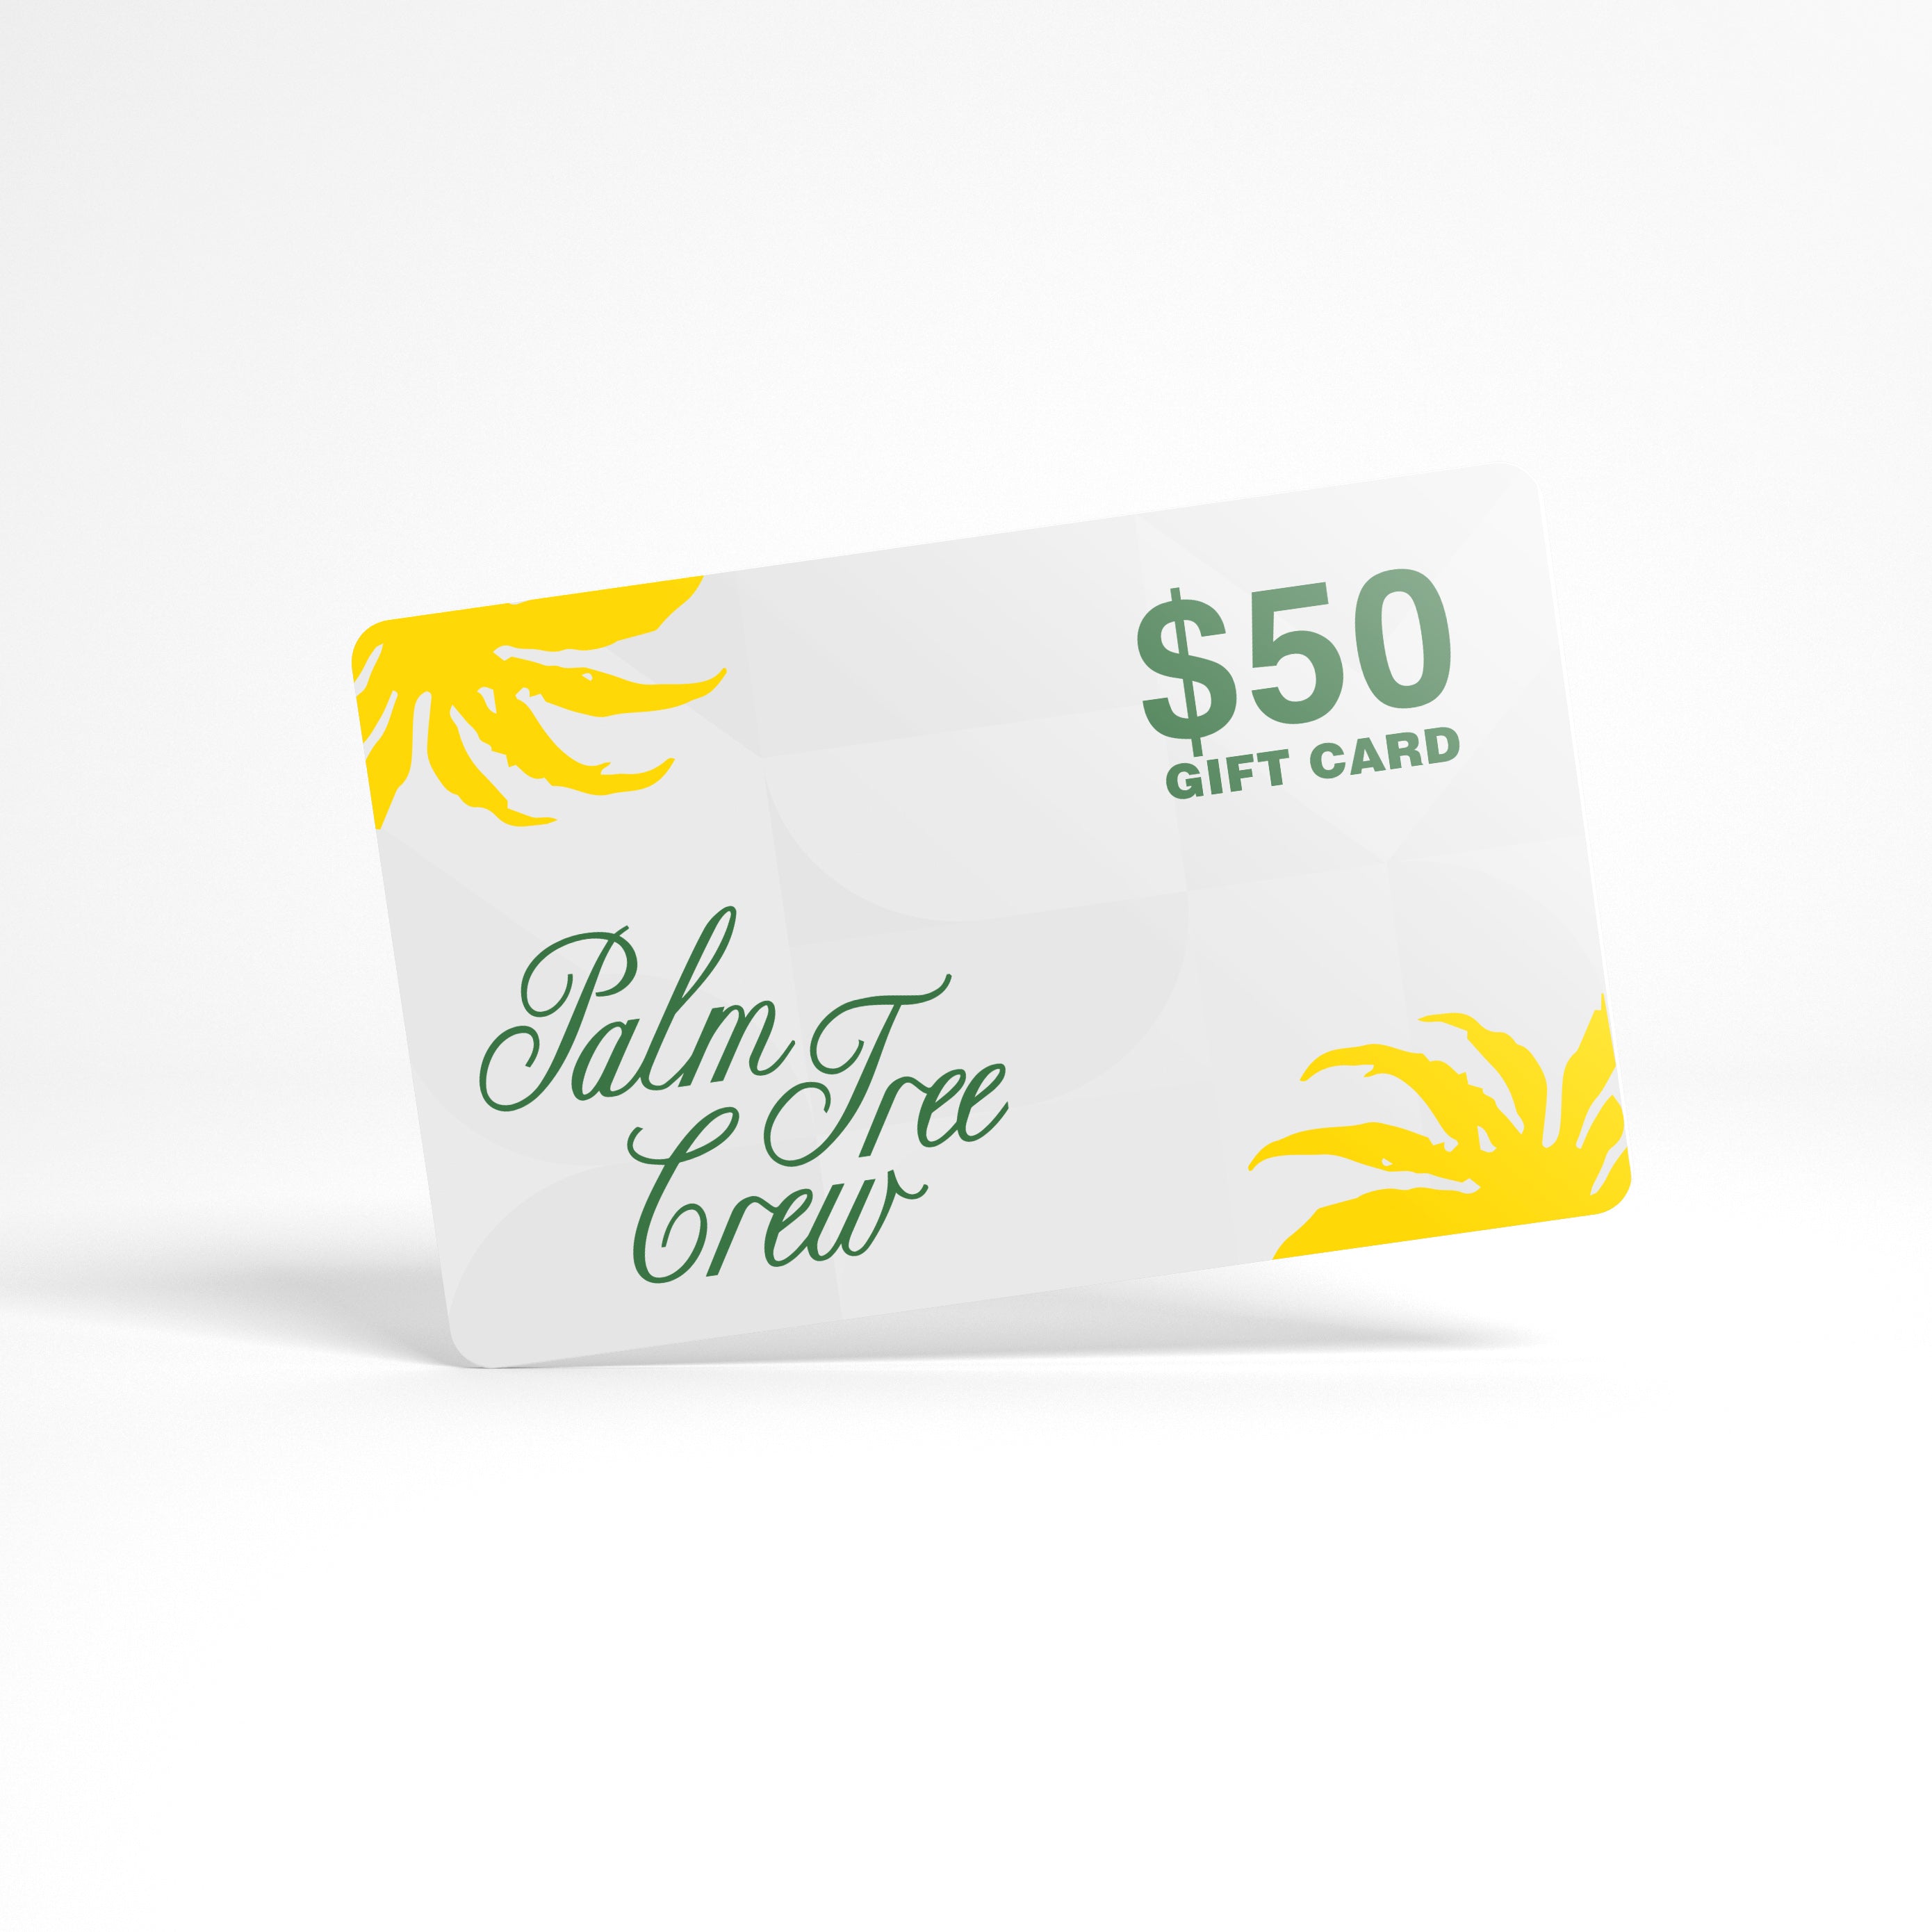 Palm Tree Crew Gift Card